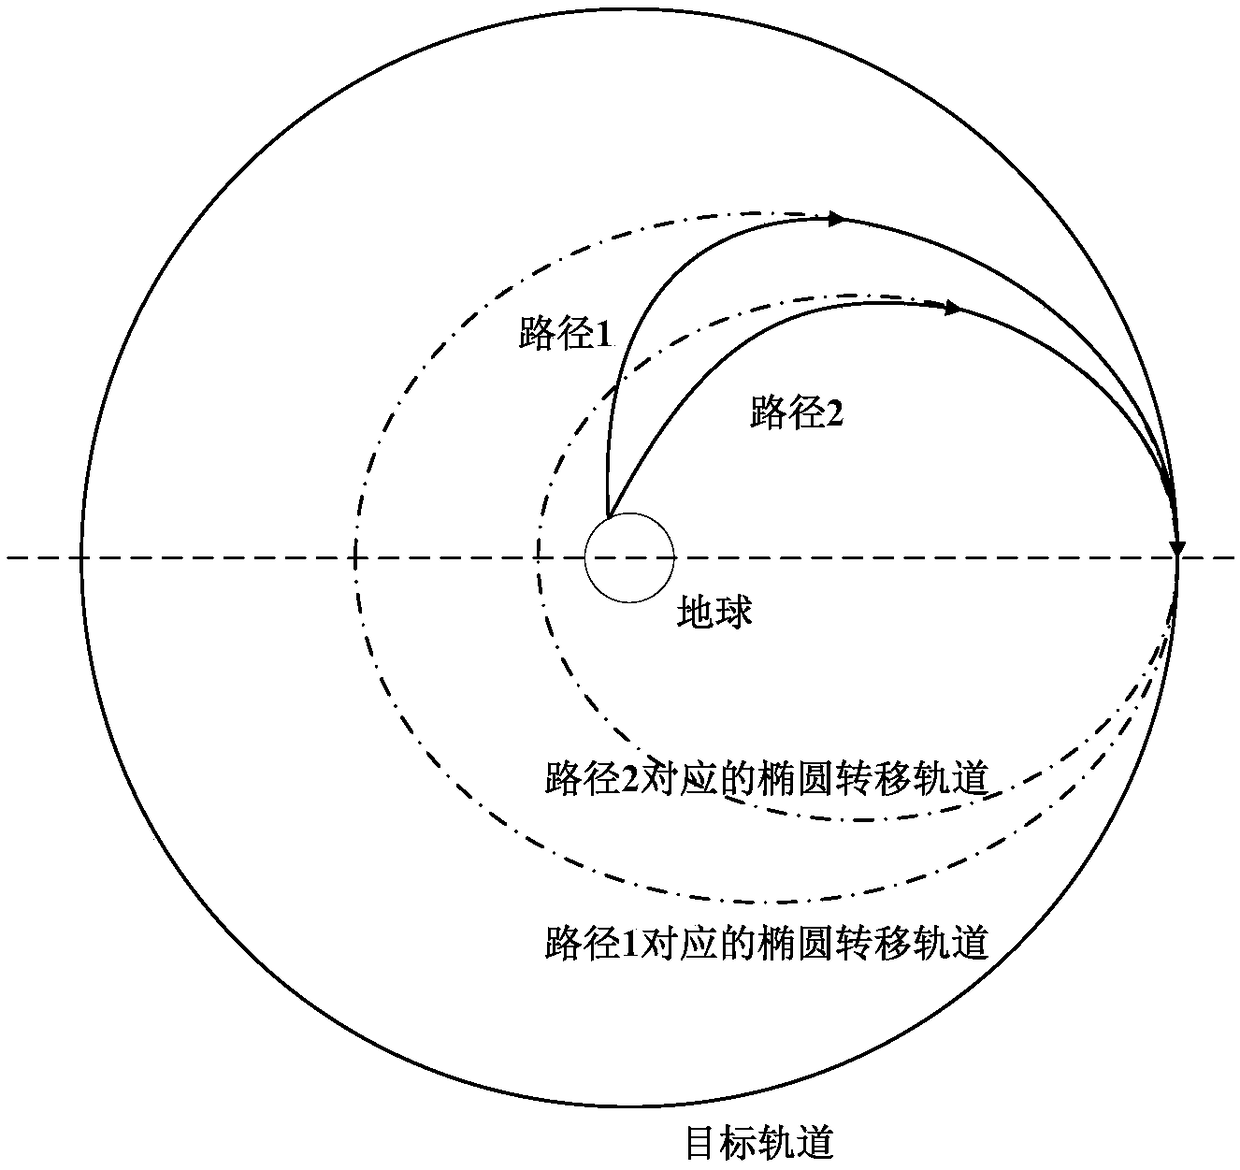 Orbit-injection-type trajectory design method of solid rocket based on elliptical transfer orbit